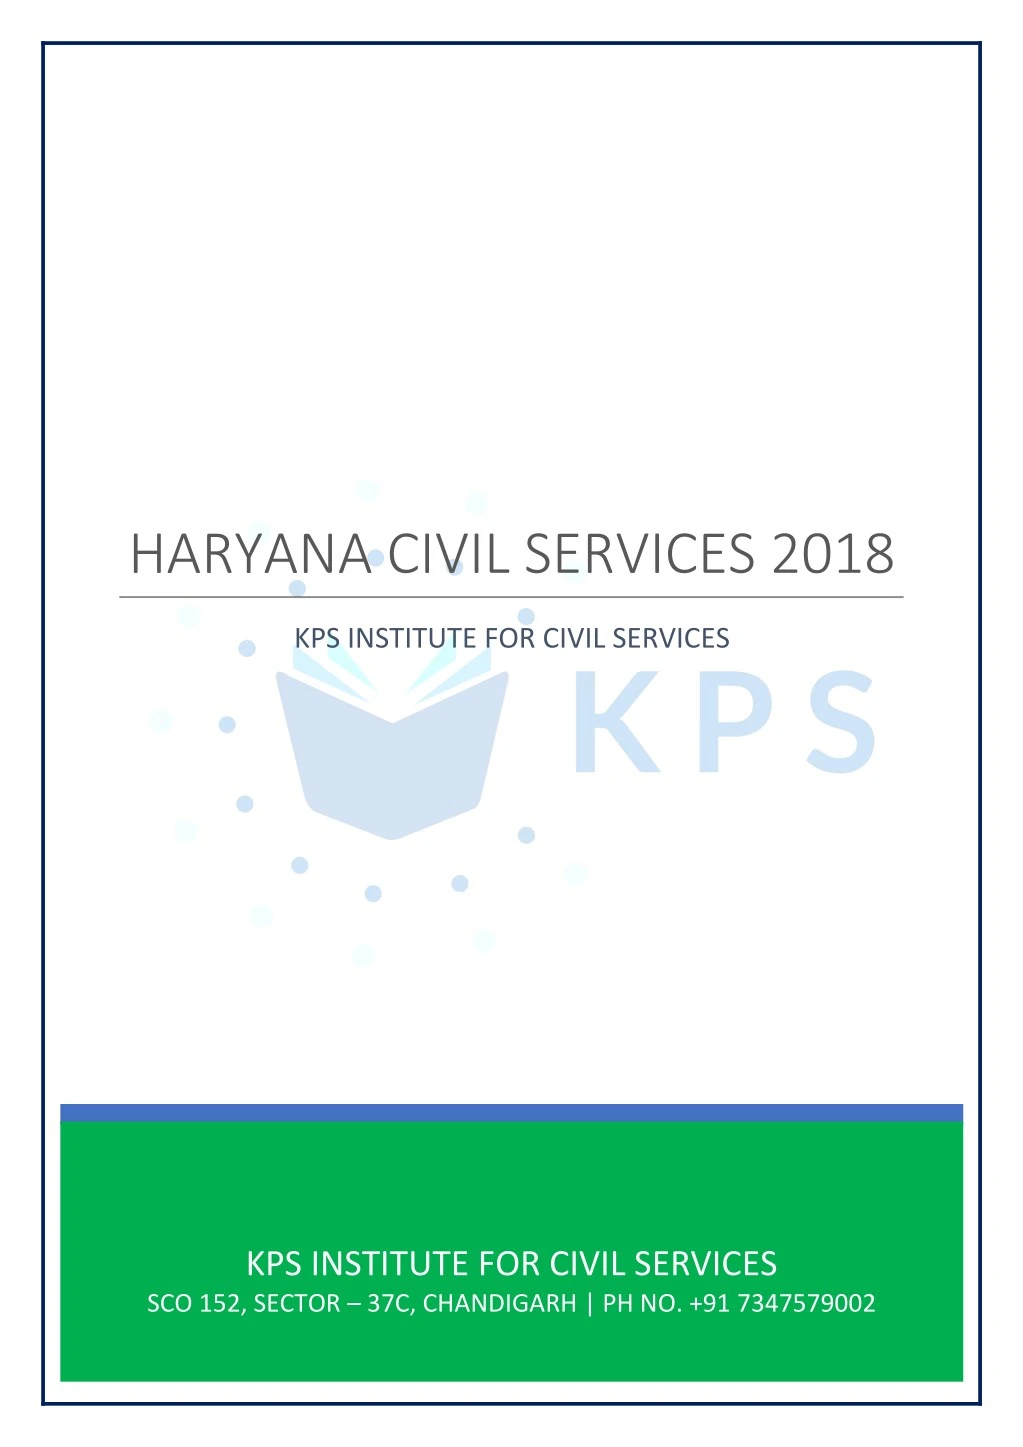 haryana civil services 2018